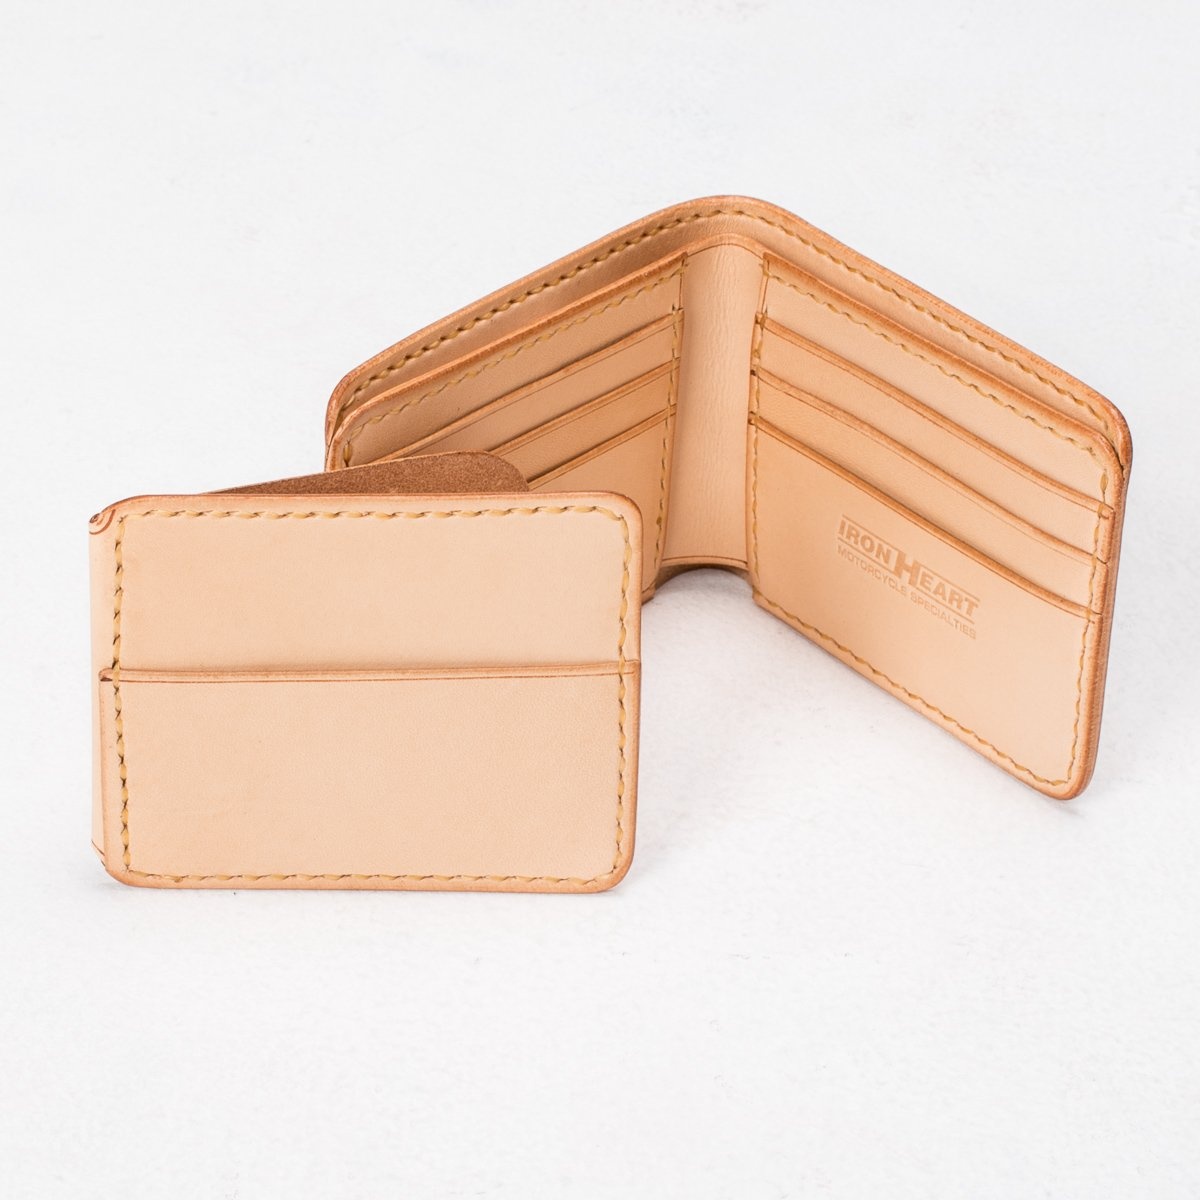 IHG-035 Calf Folding Wallet - Black or Tan - 4